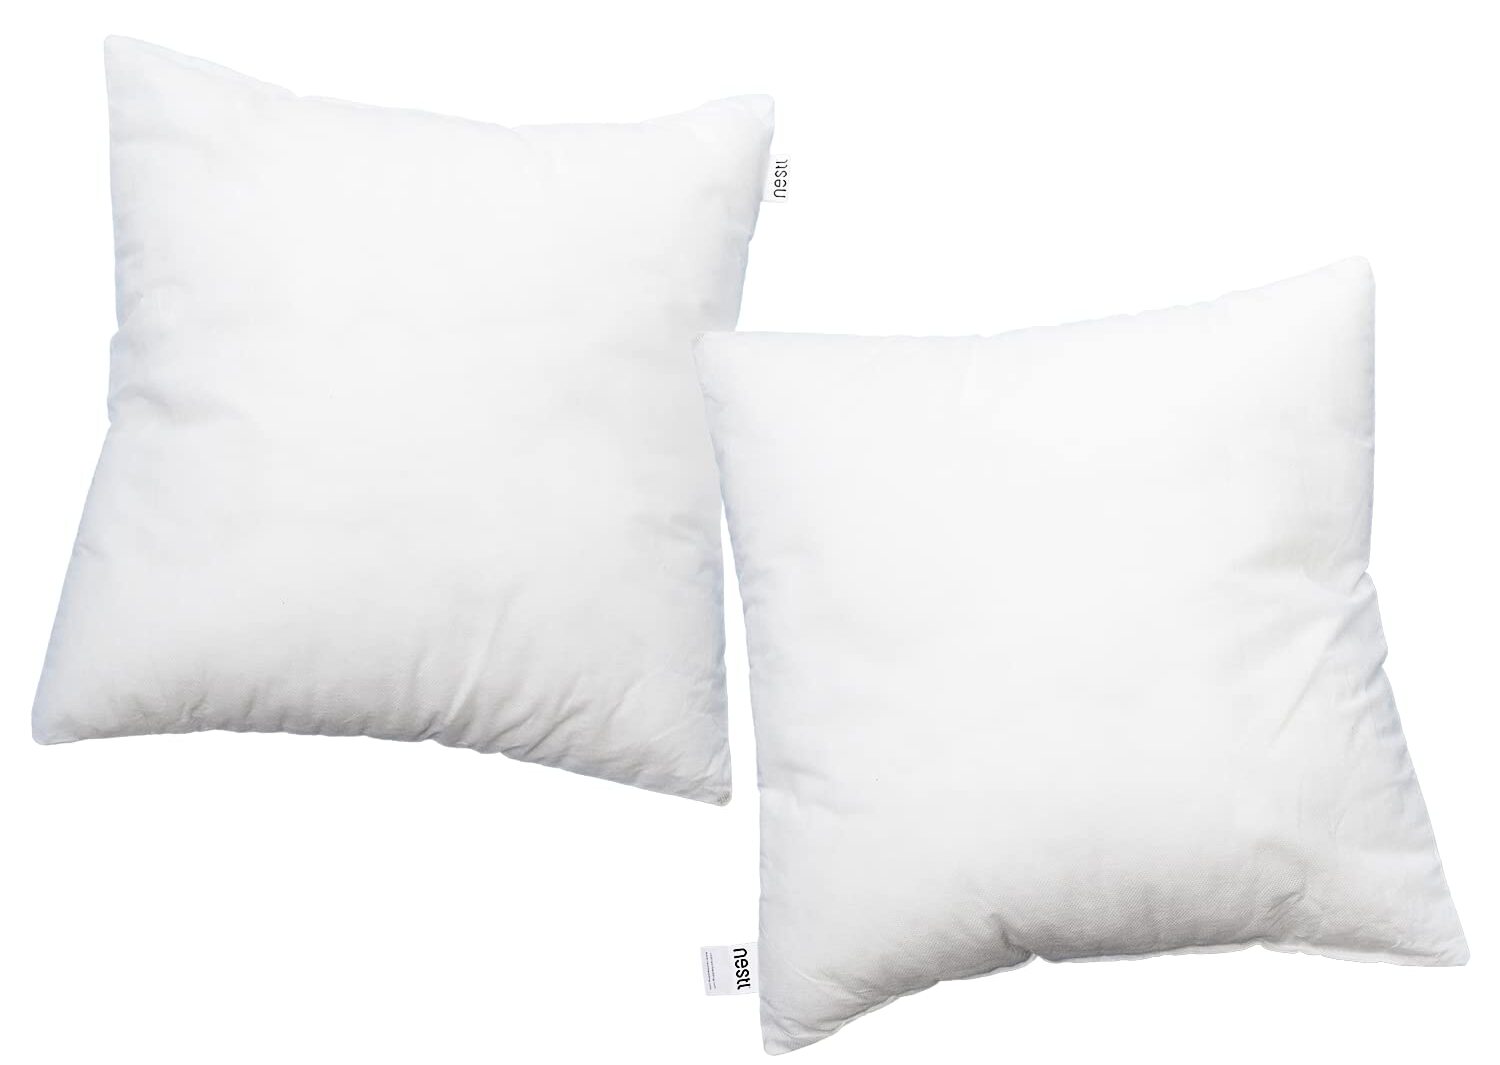 Euro Pillow Sham Covers 26x26 Set of 2, Super Soft and Cozy White European Pillow  Shams, Brushed Microfiber Euro Sham Pillow Covers 